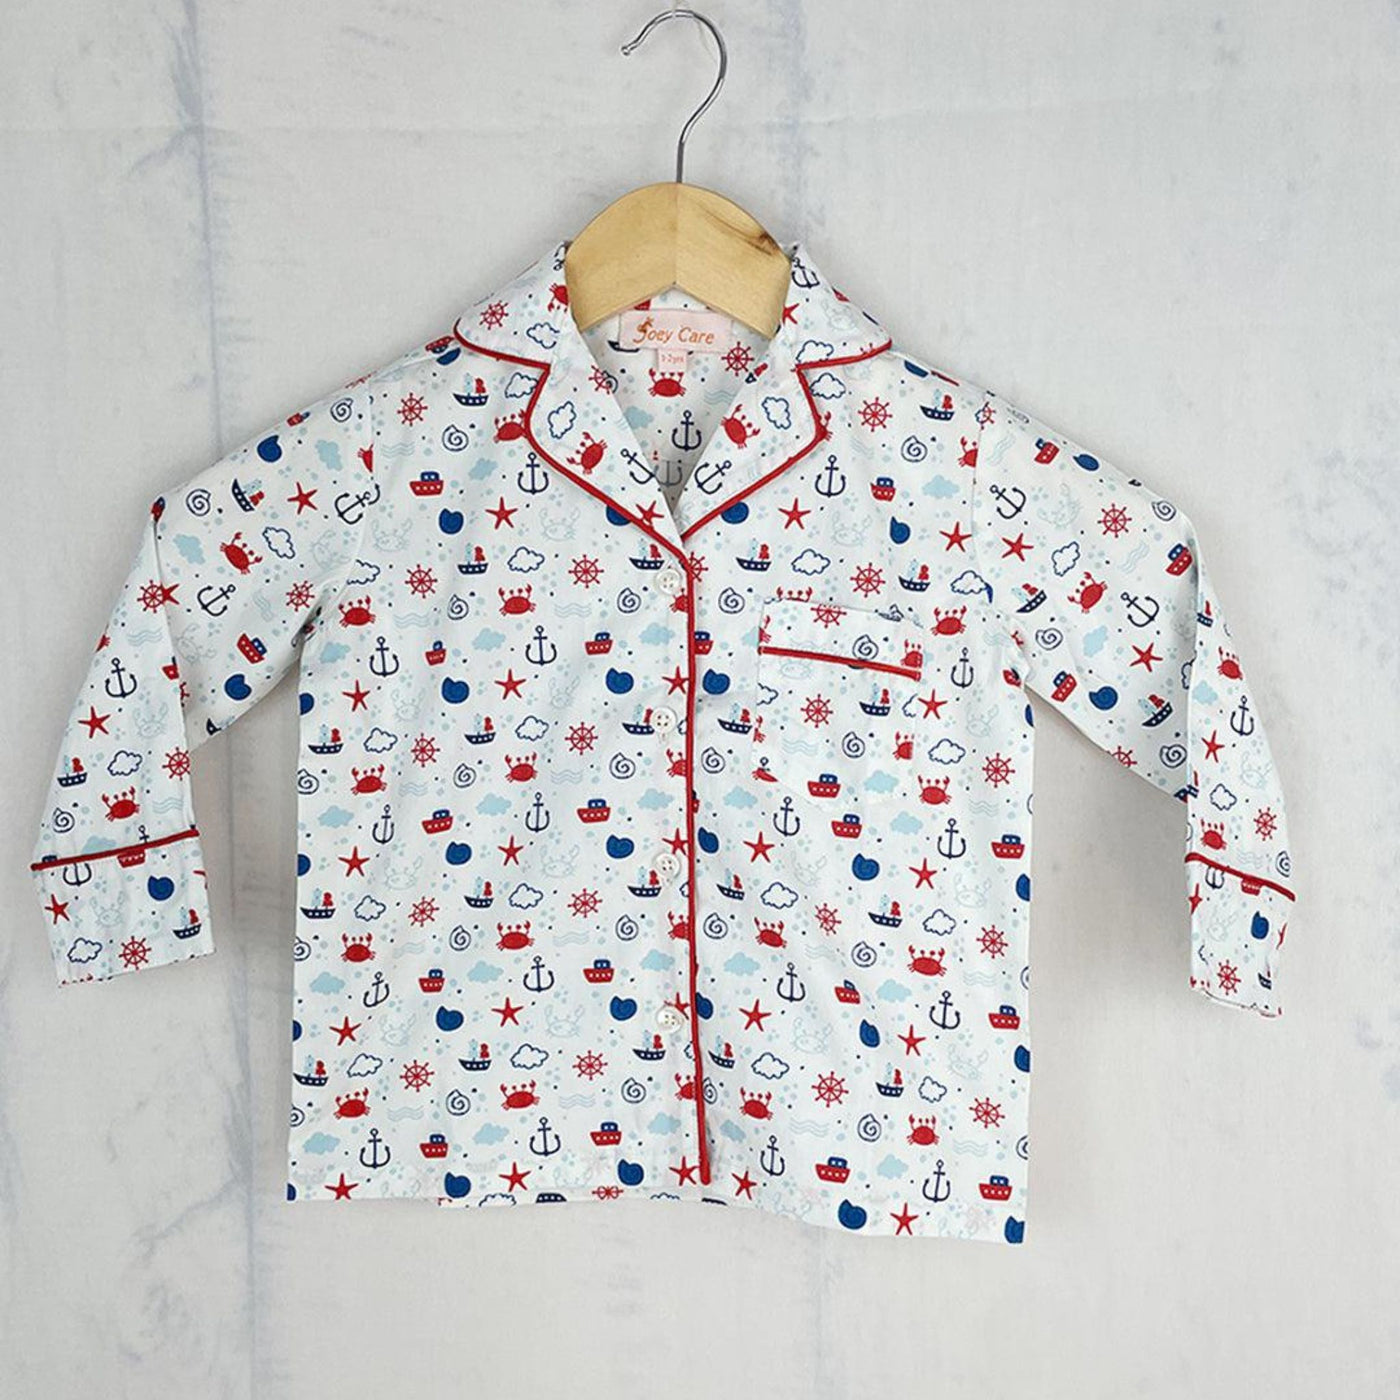 Pocket Nightwear for Girls and Boys - Ship print Joeycare